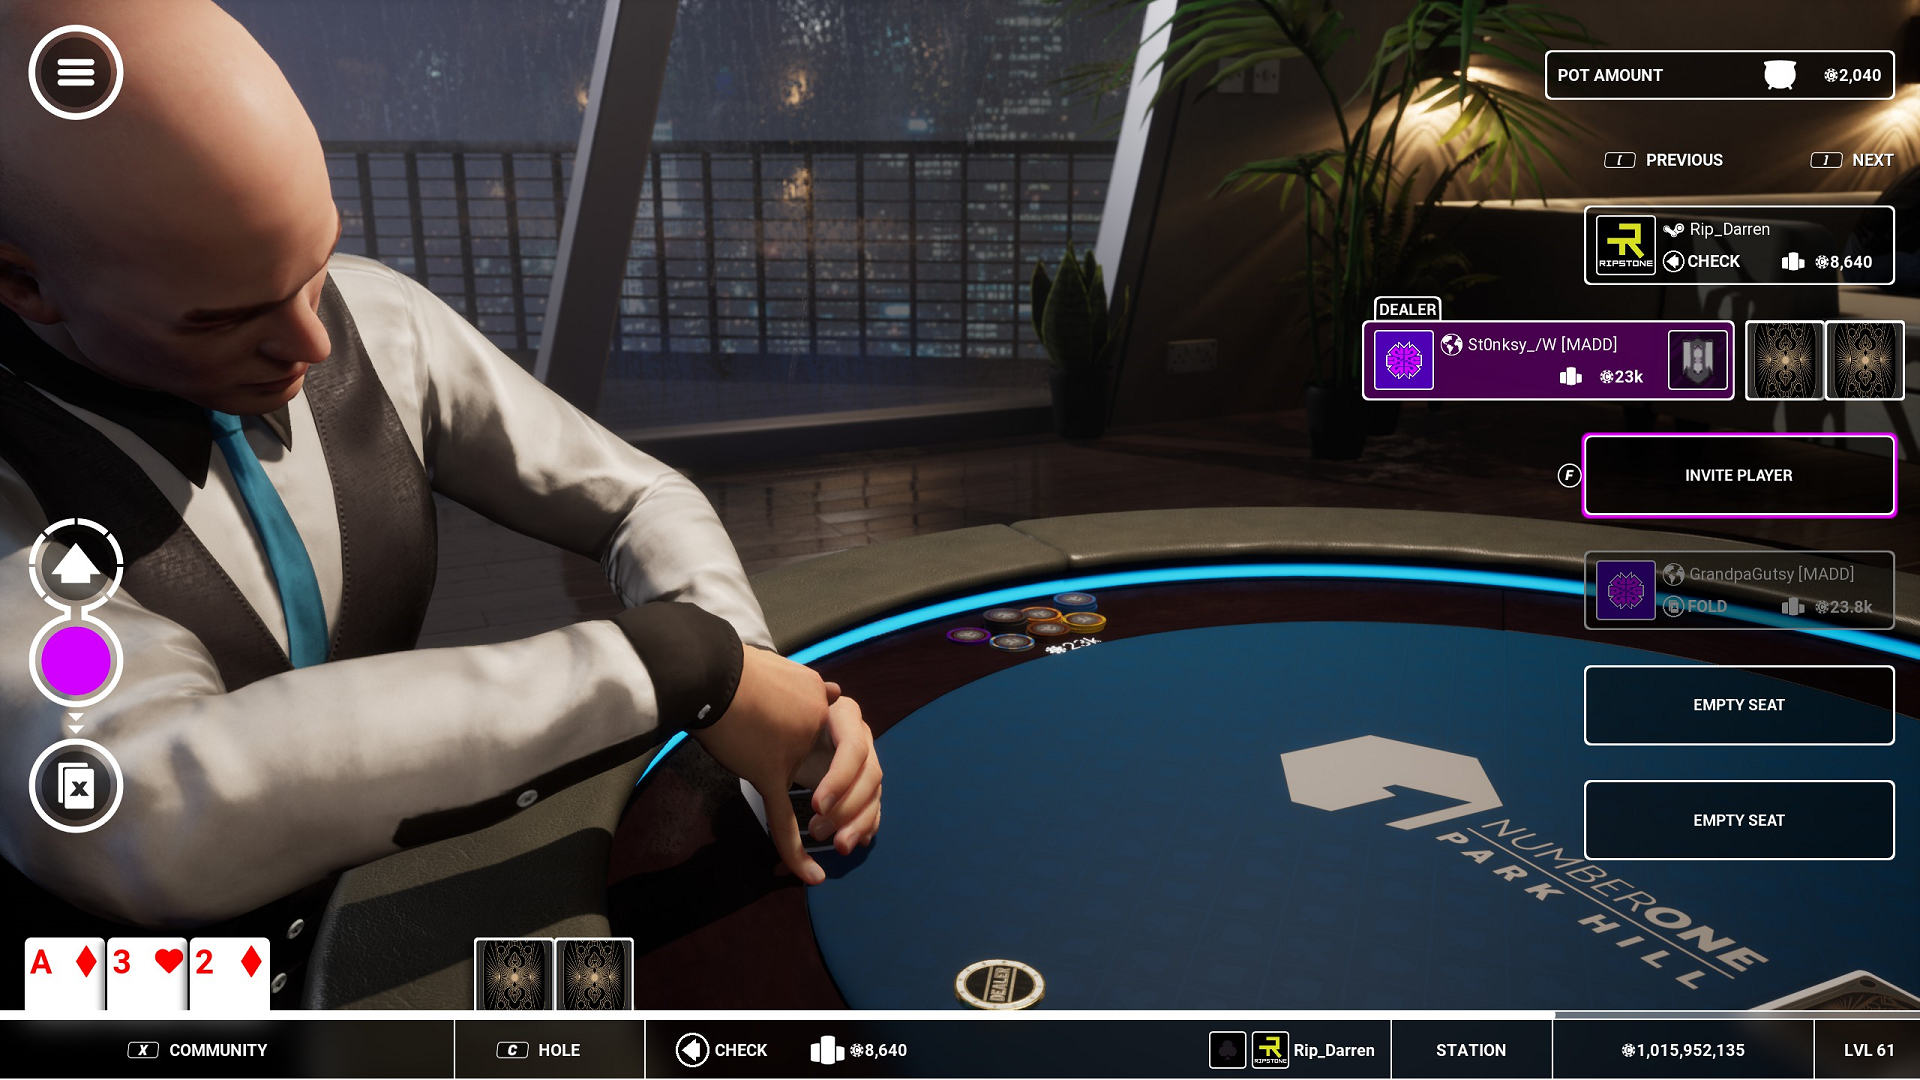 Poker Club on Steam